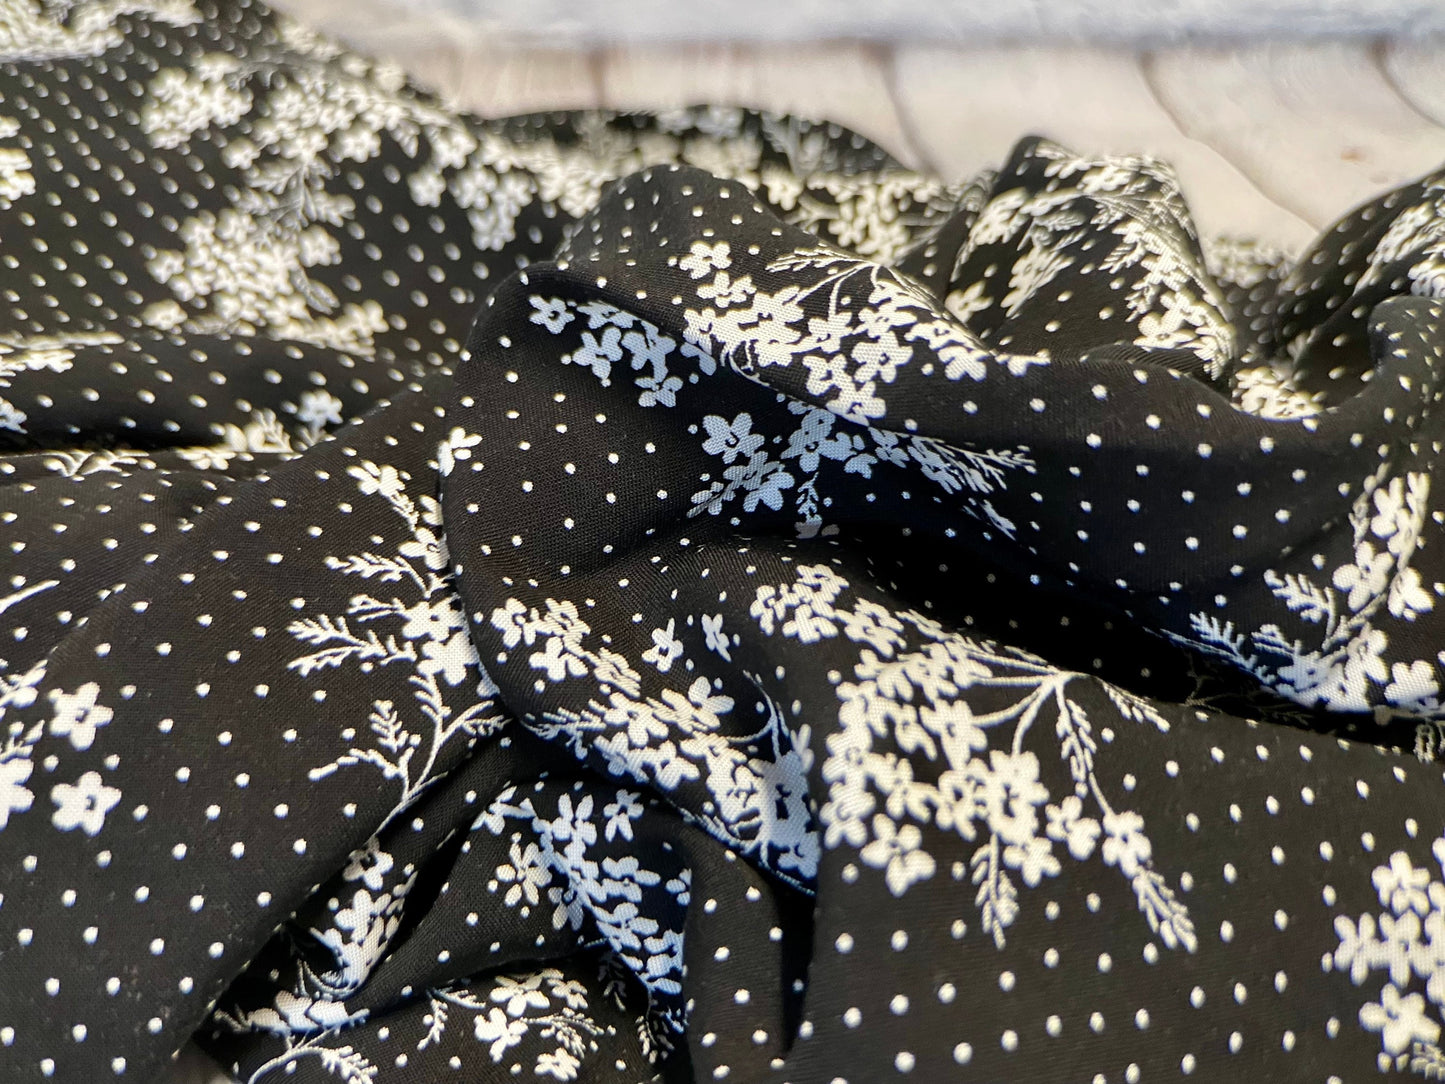 Rayon Challis Woven Print Fabric By The Yard Floral Polka Dot